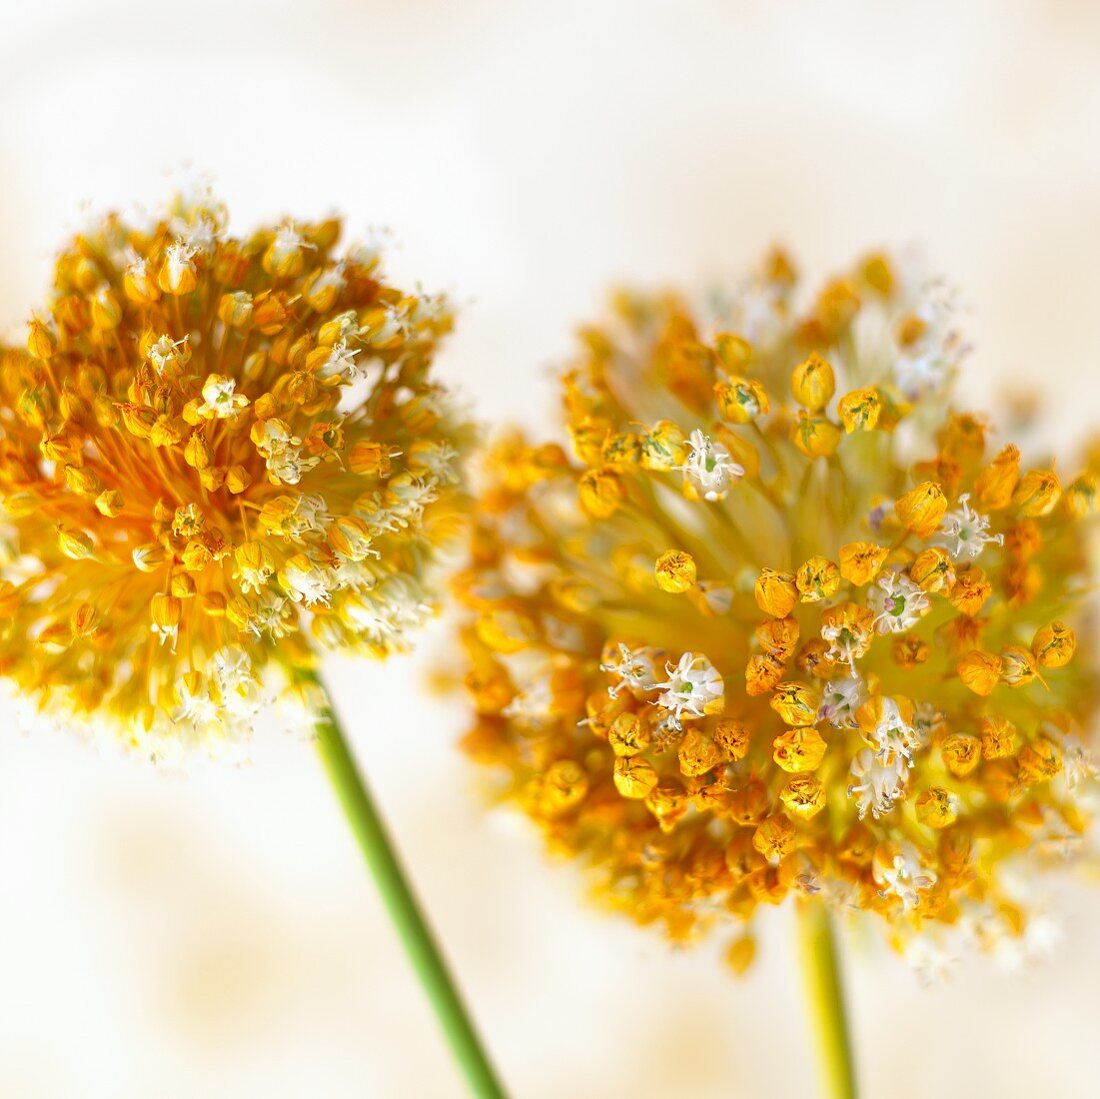 Garlic flowers (close-up)